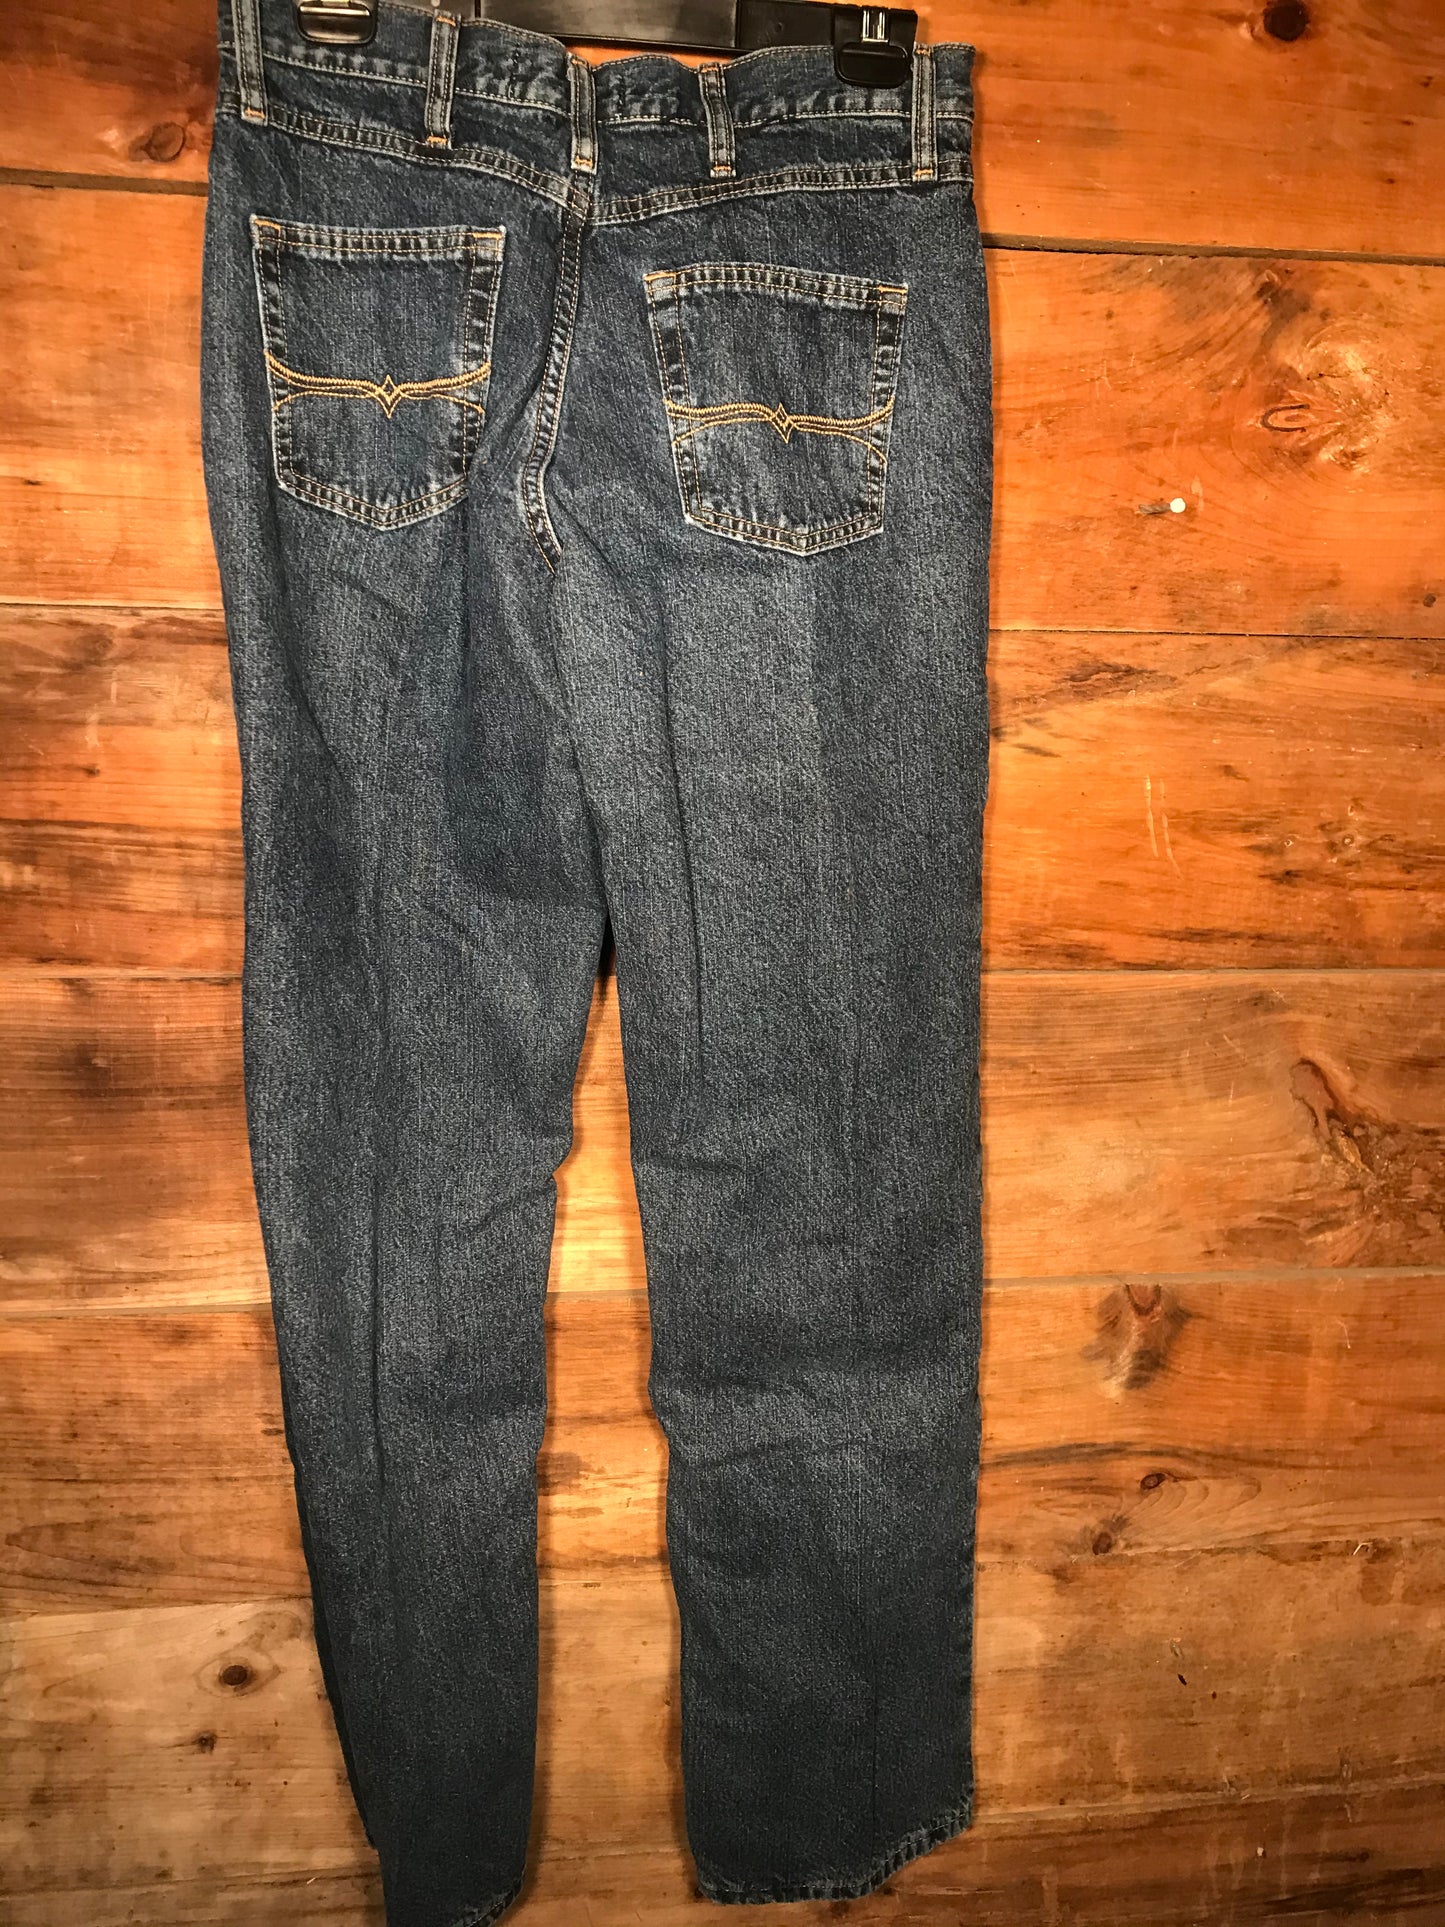 Wrangler fleece lined size 6x34 jeans